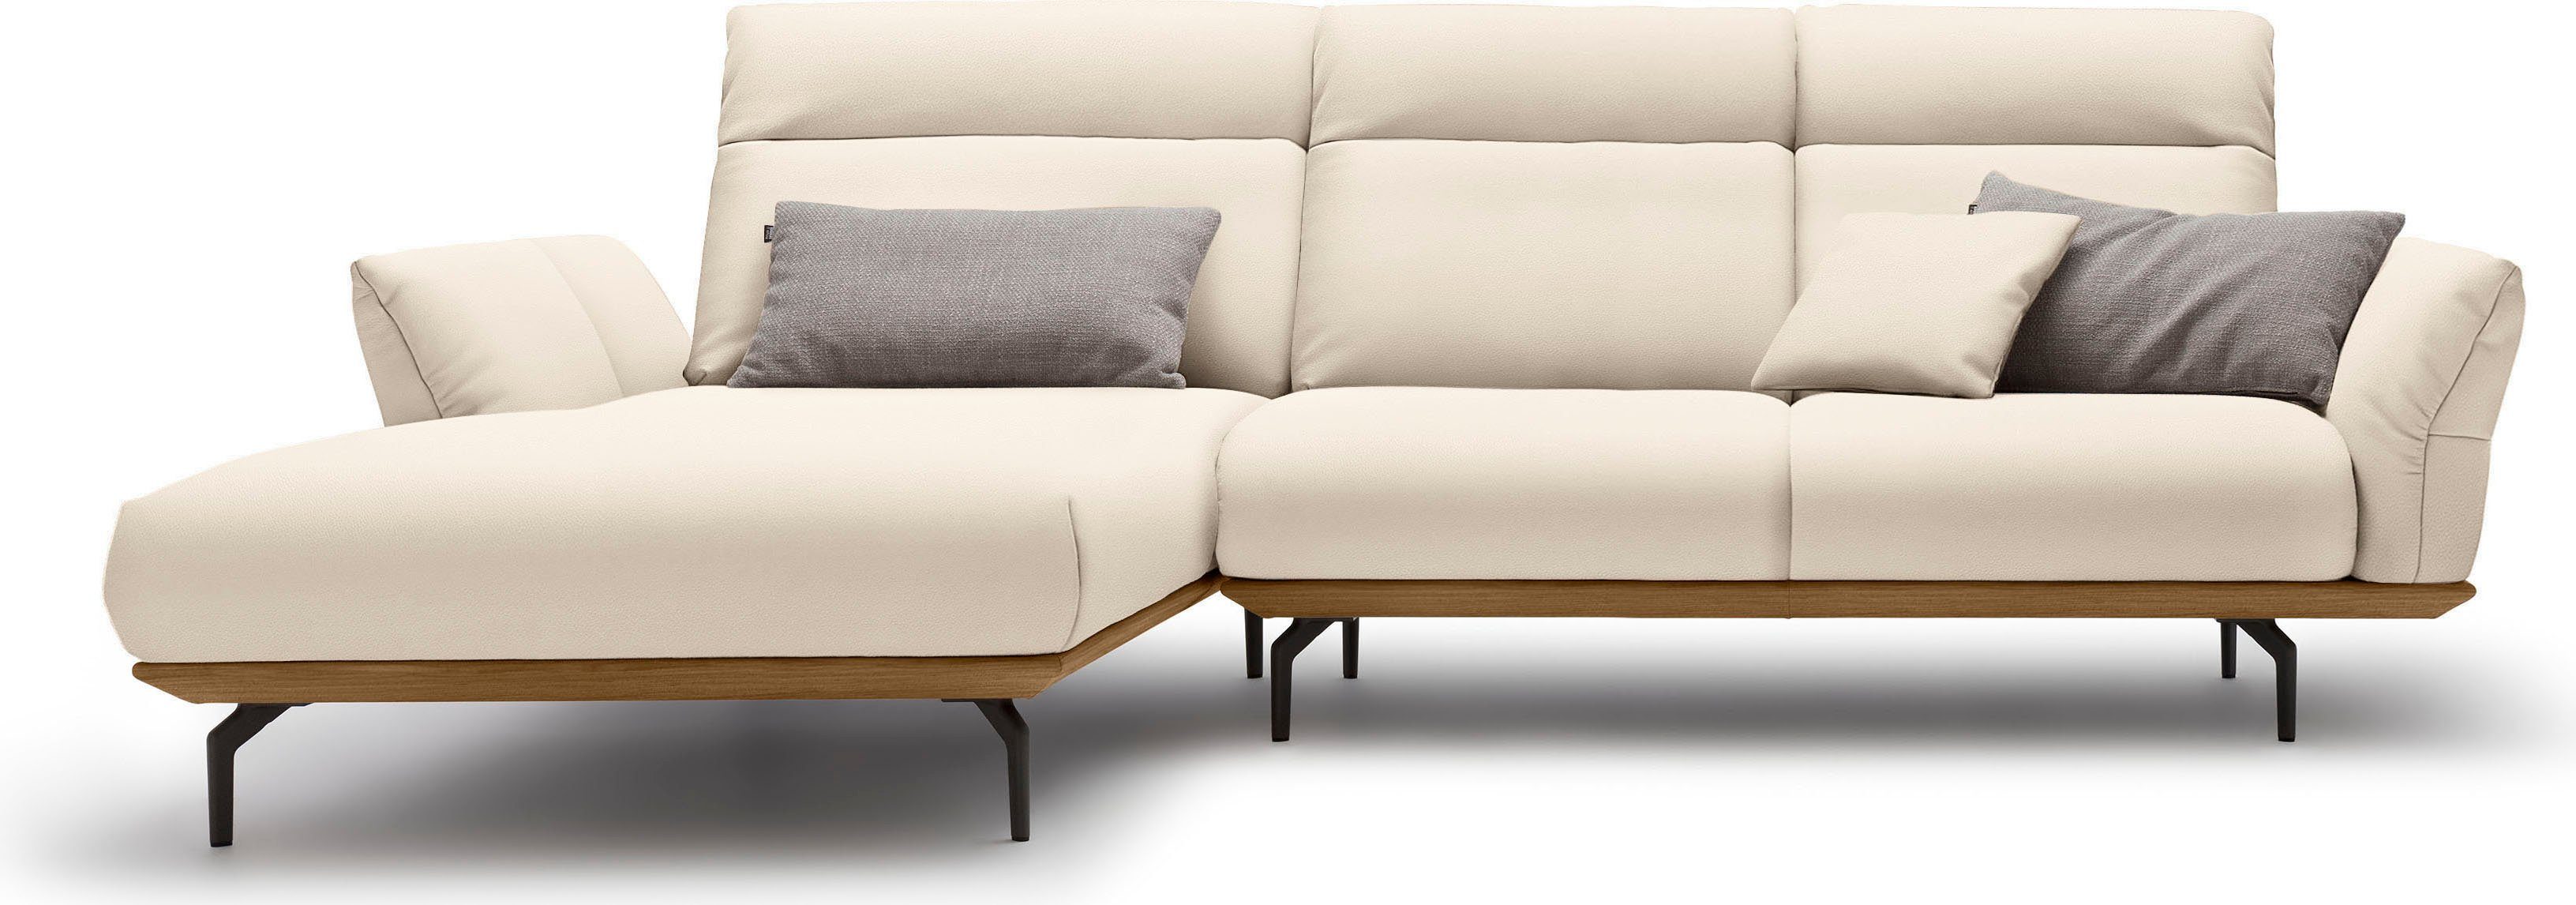 sofa in Winkelfüße Umbragrau, Breite Nussbaum, in hülsta Sockel cm hs.460, 298 Ecksofa